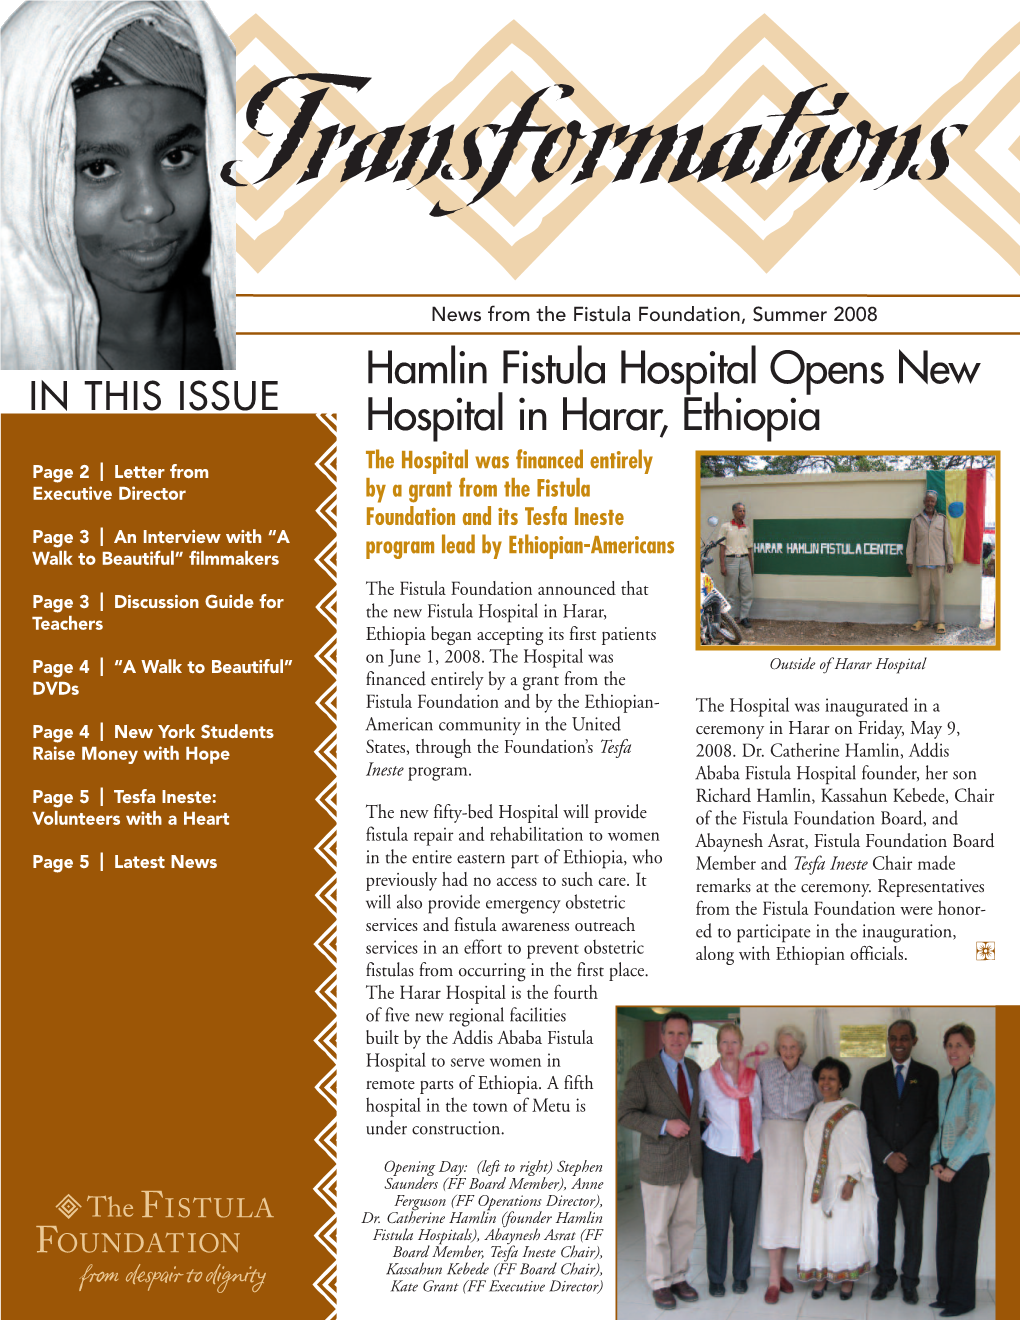 Hamlin Fistula Hospital Opens New Hospital in Harar, Ethiopia